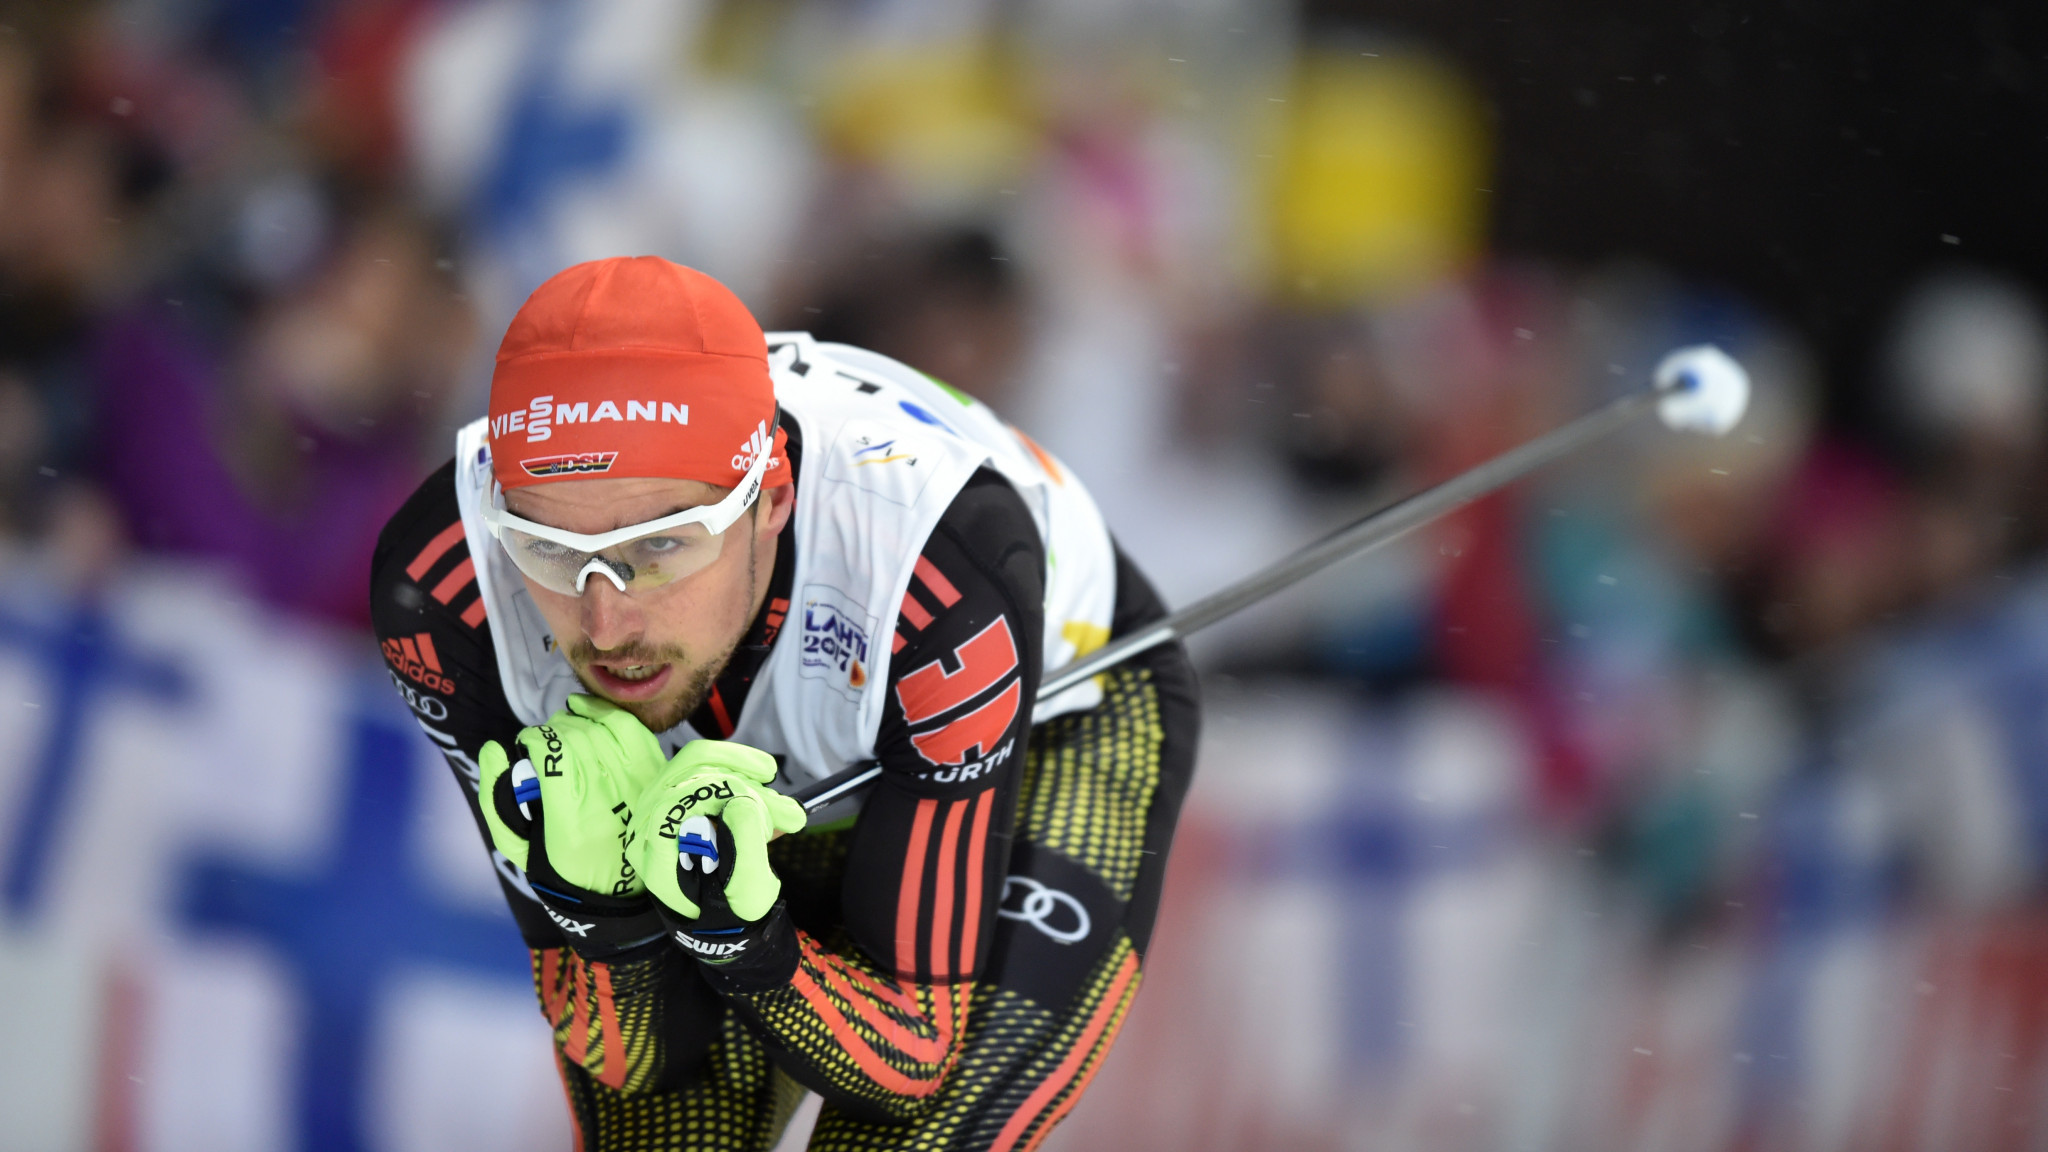 Johannes Rydzek was forced to settle for second place alongside Fabian Rießle ©Getty Images